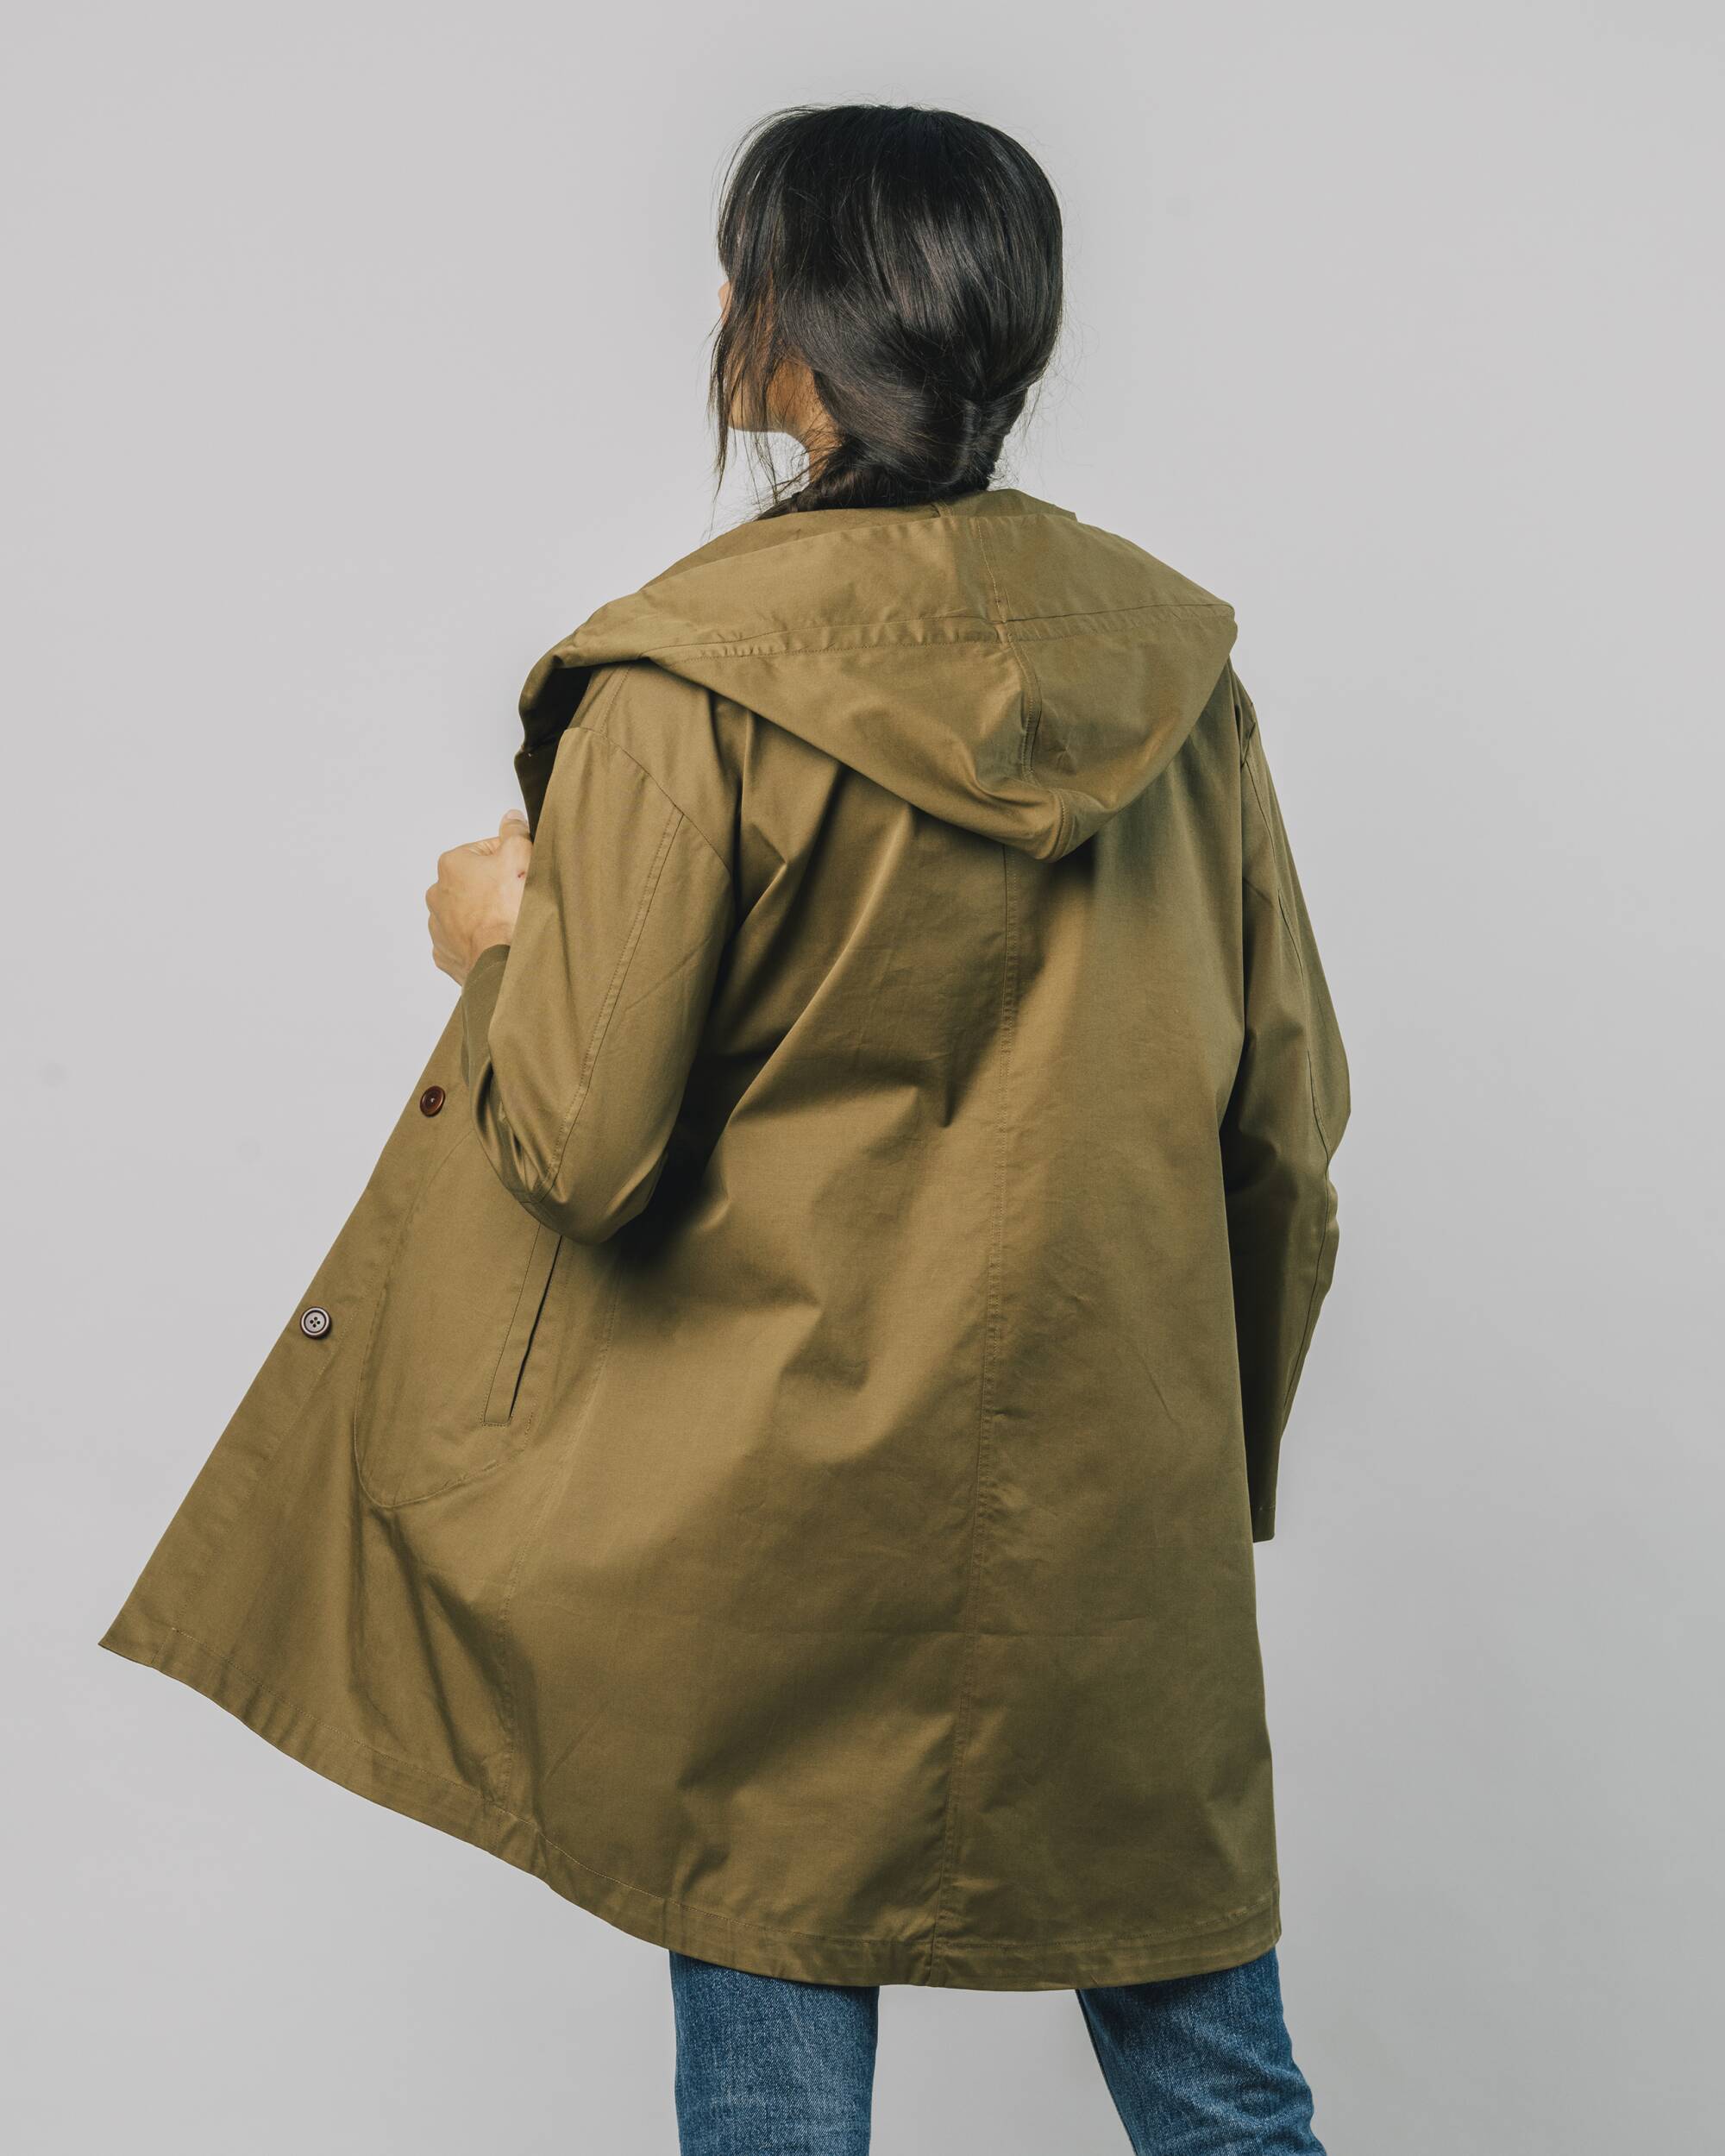 Green jacket hooded parka made of organic cotton from Brava Fabrics